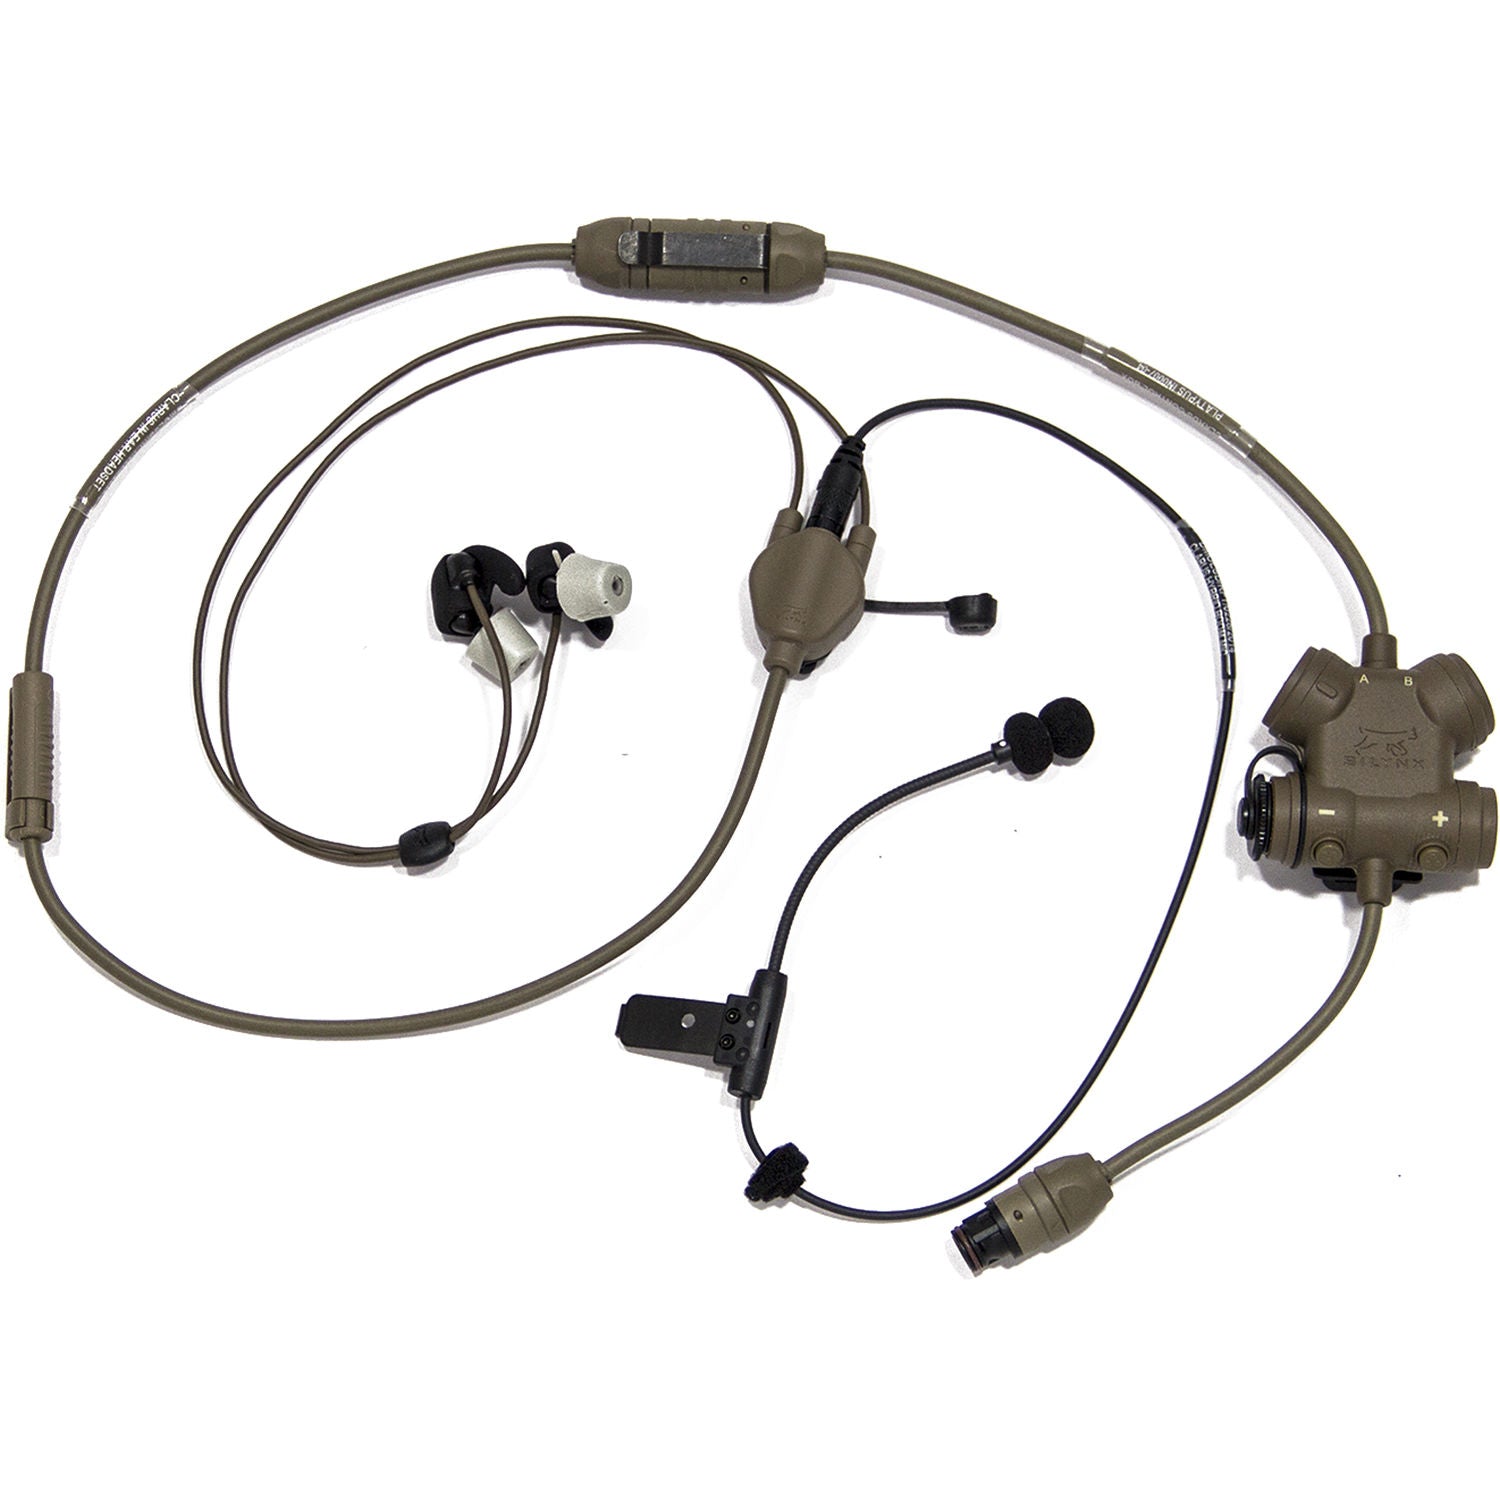 Tactical Headset/Communication Earpiece